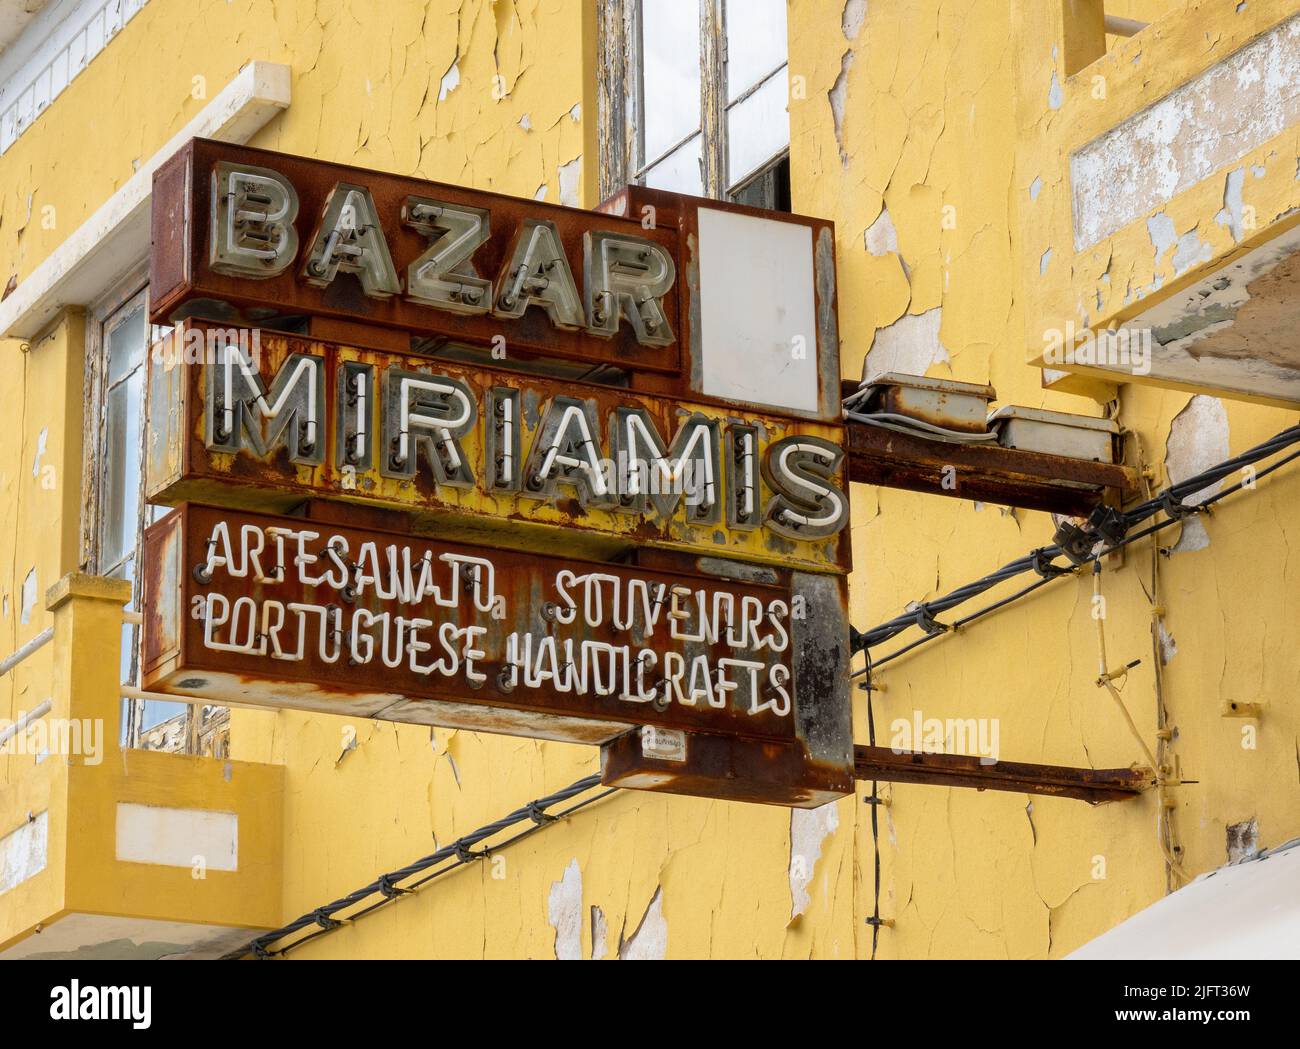 An Old Retro Neon Shop Sign In Portimao, Portugal Bazar Miriamis Tourist Souvenirs Stock Photo